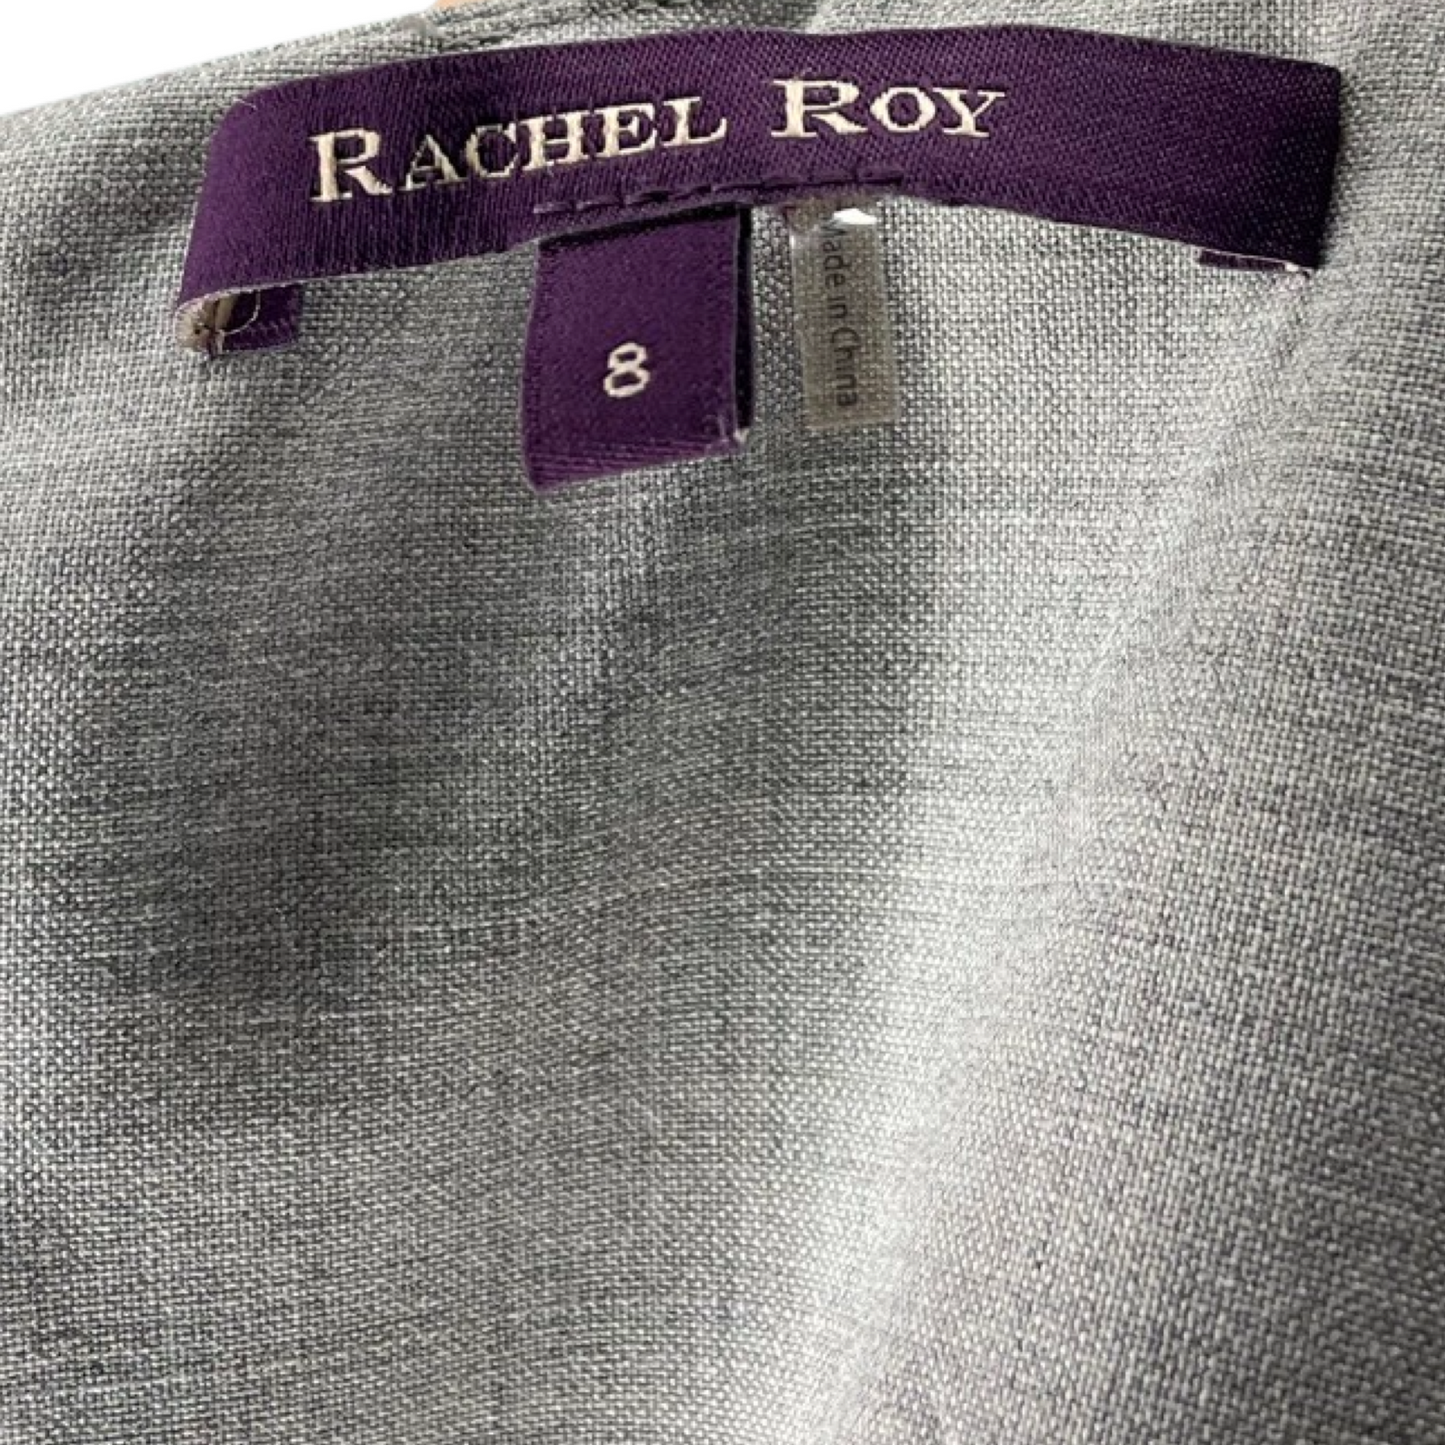 Vestido Rachel Roy Negro - Talla 8